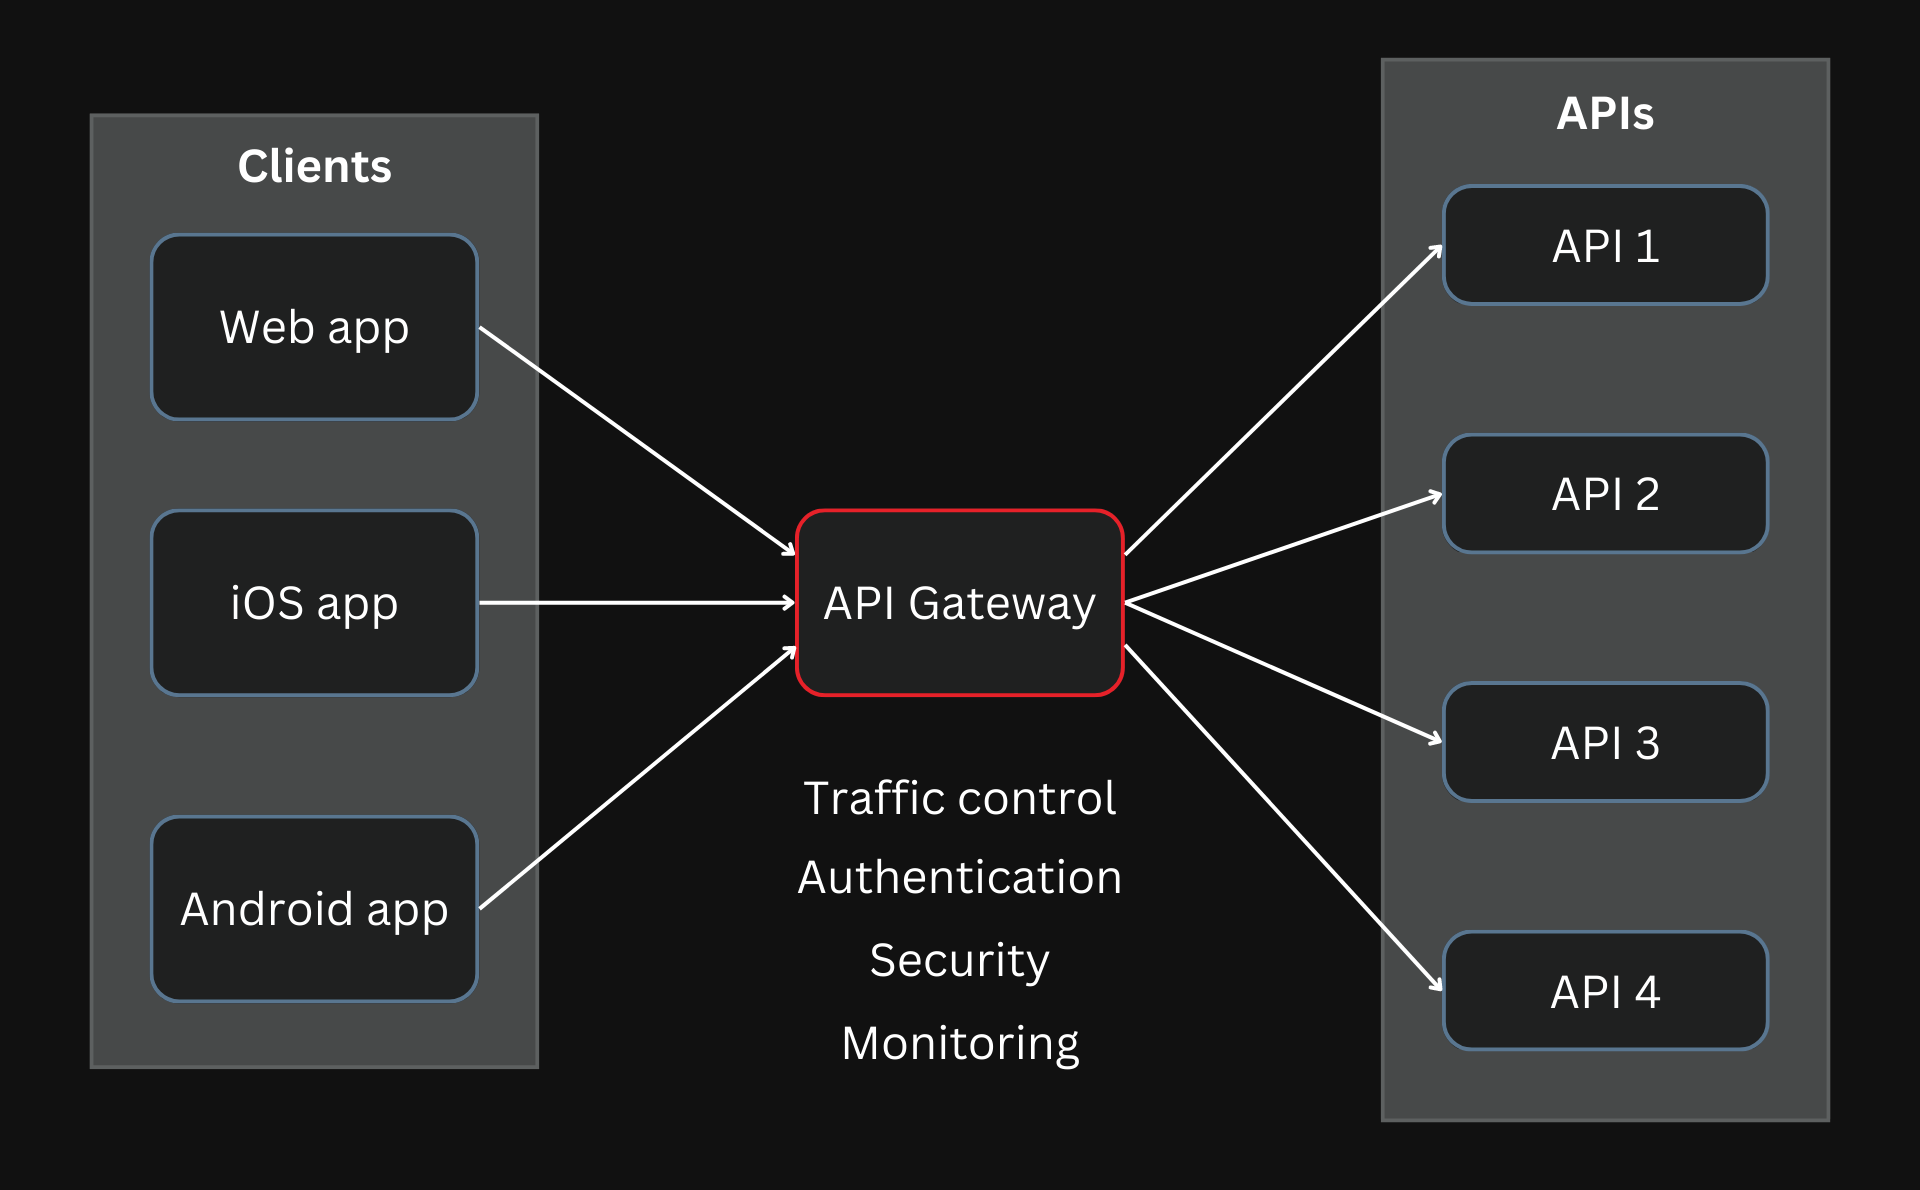 API gateway